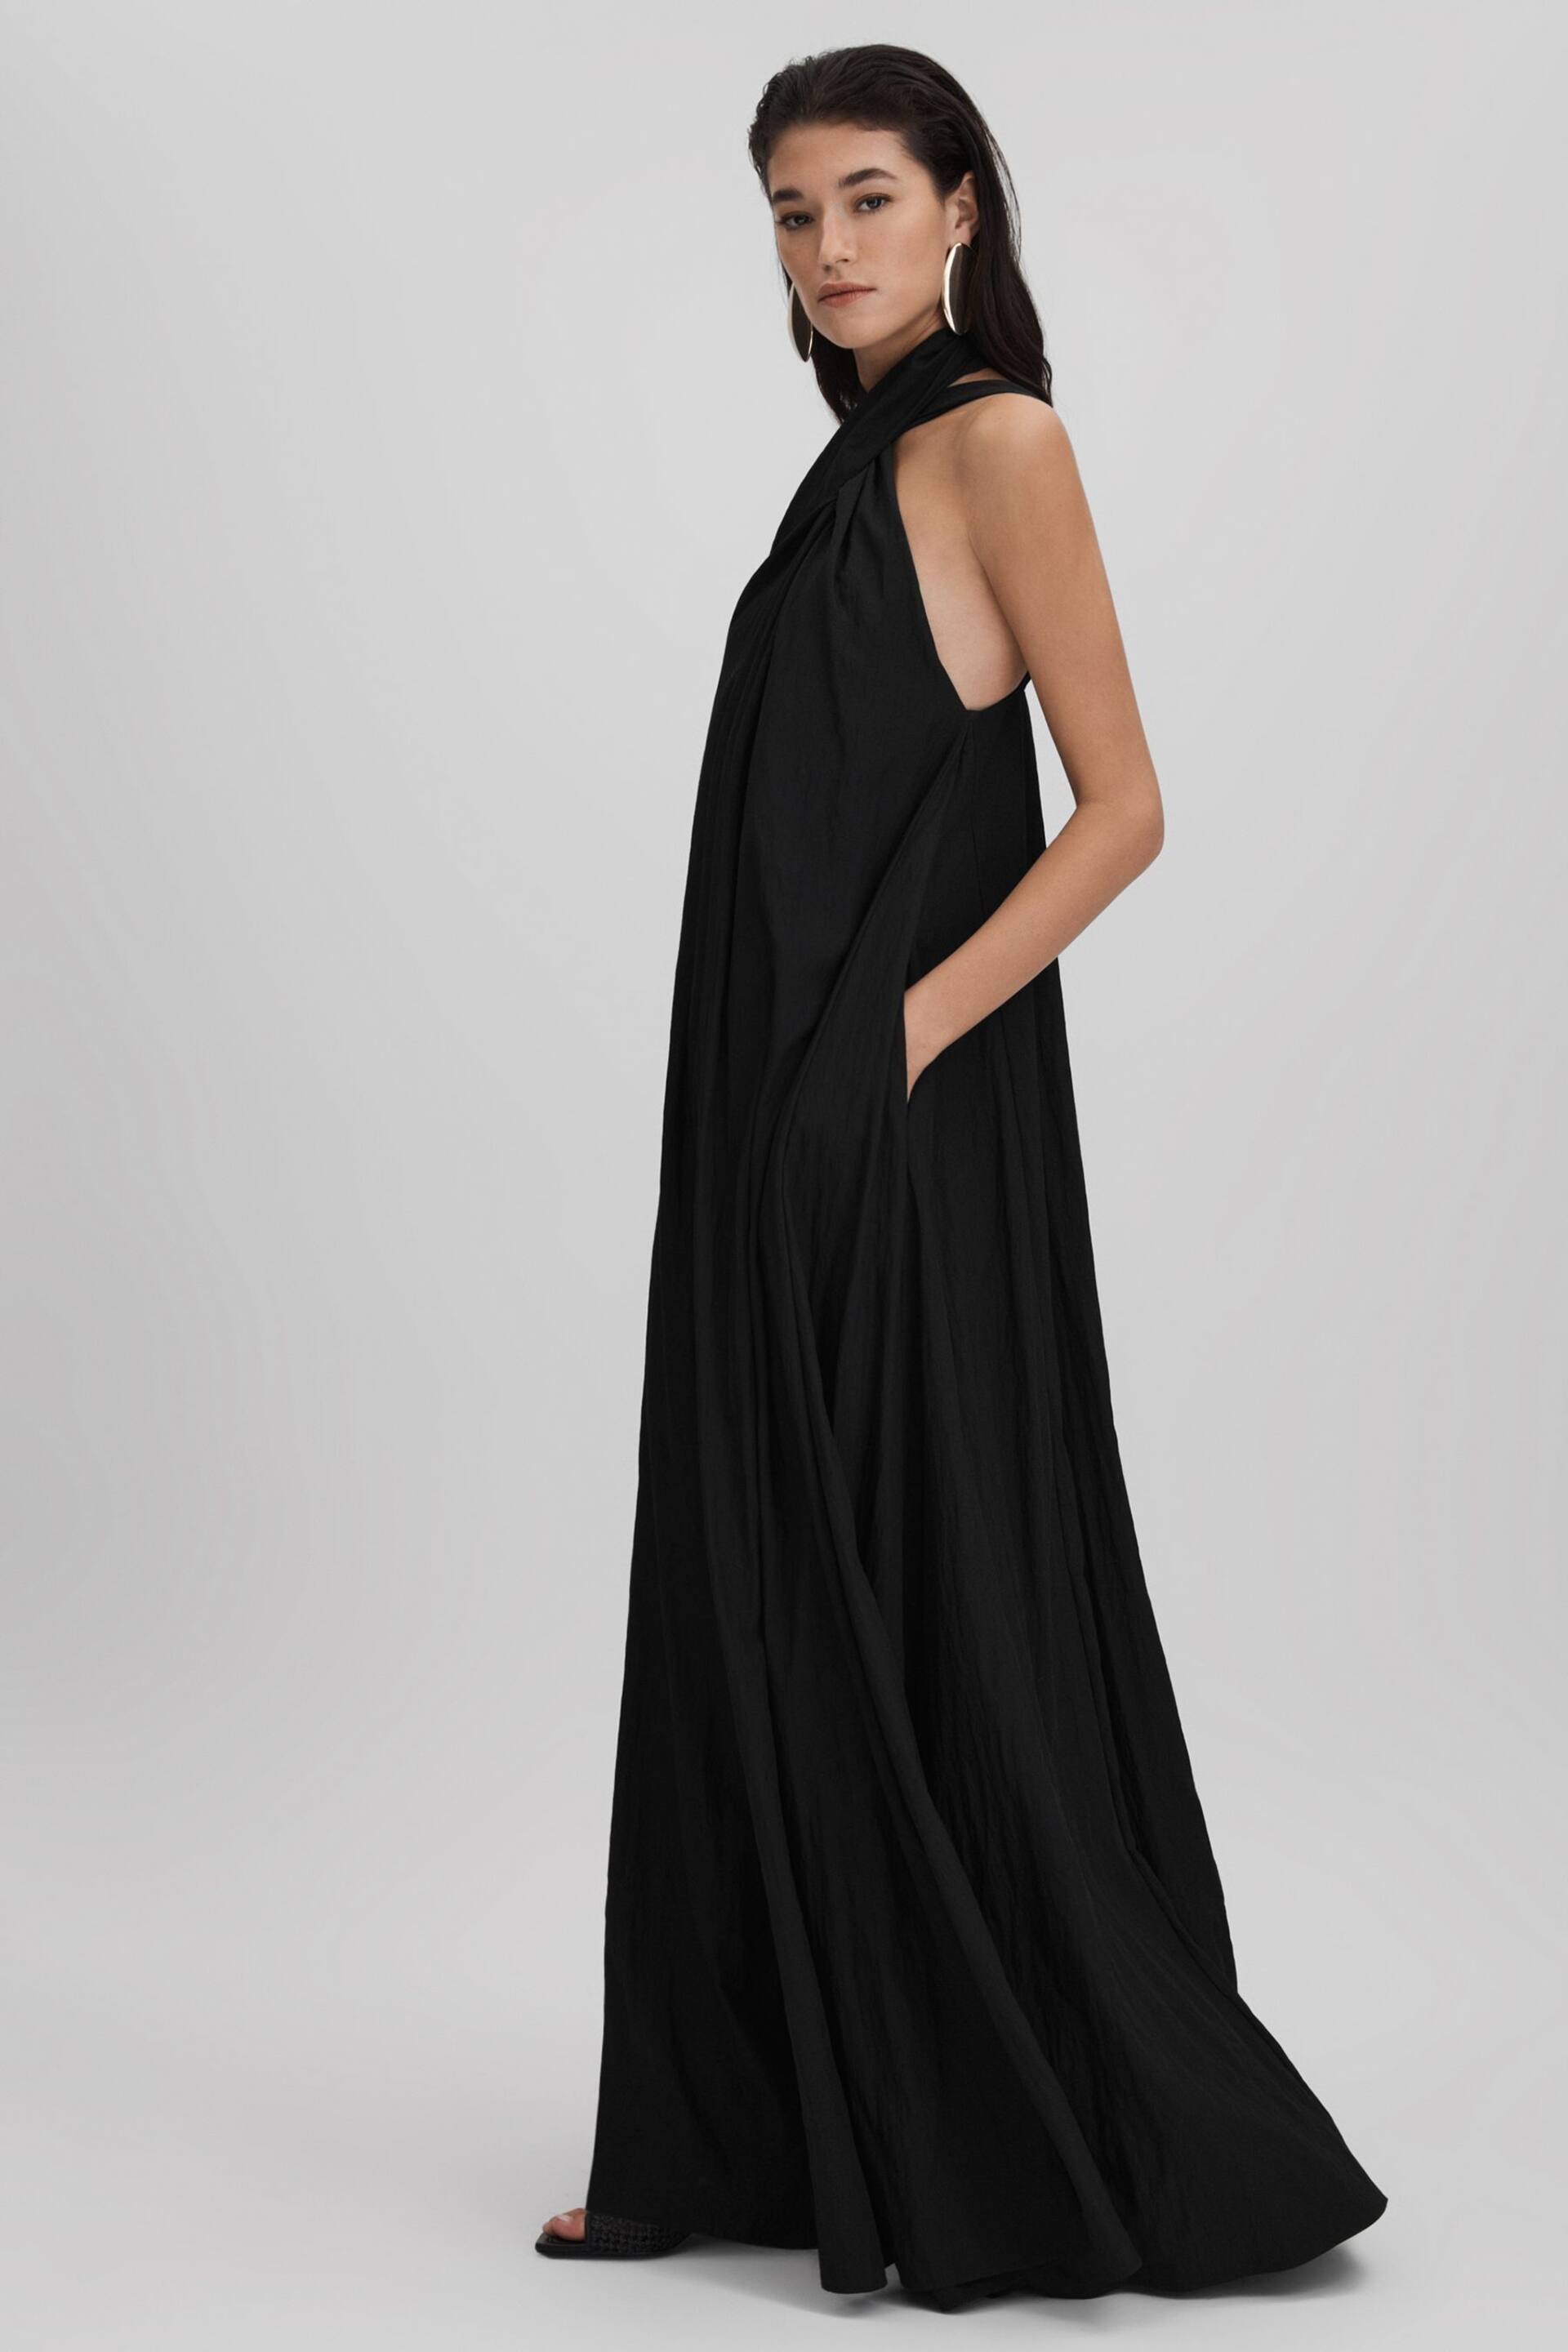 Reiss Black Phoebe Taffeta Halter Neck Maxi Dress - Image 5 of 6